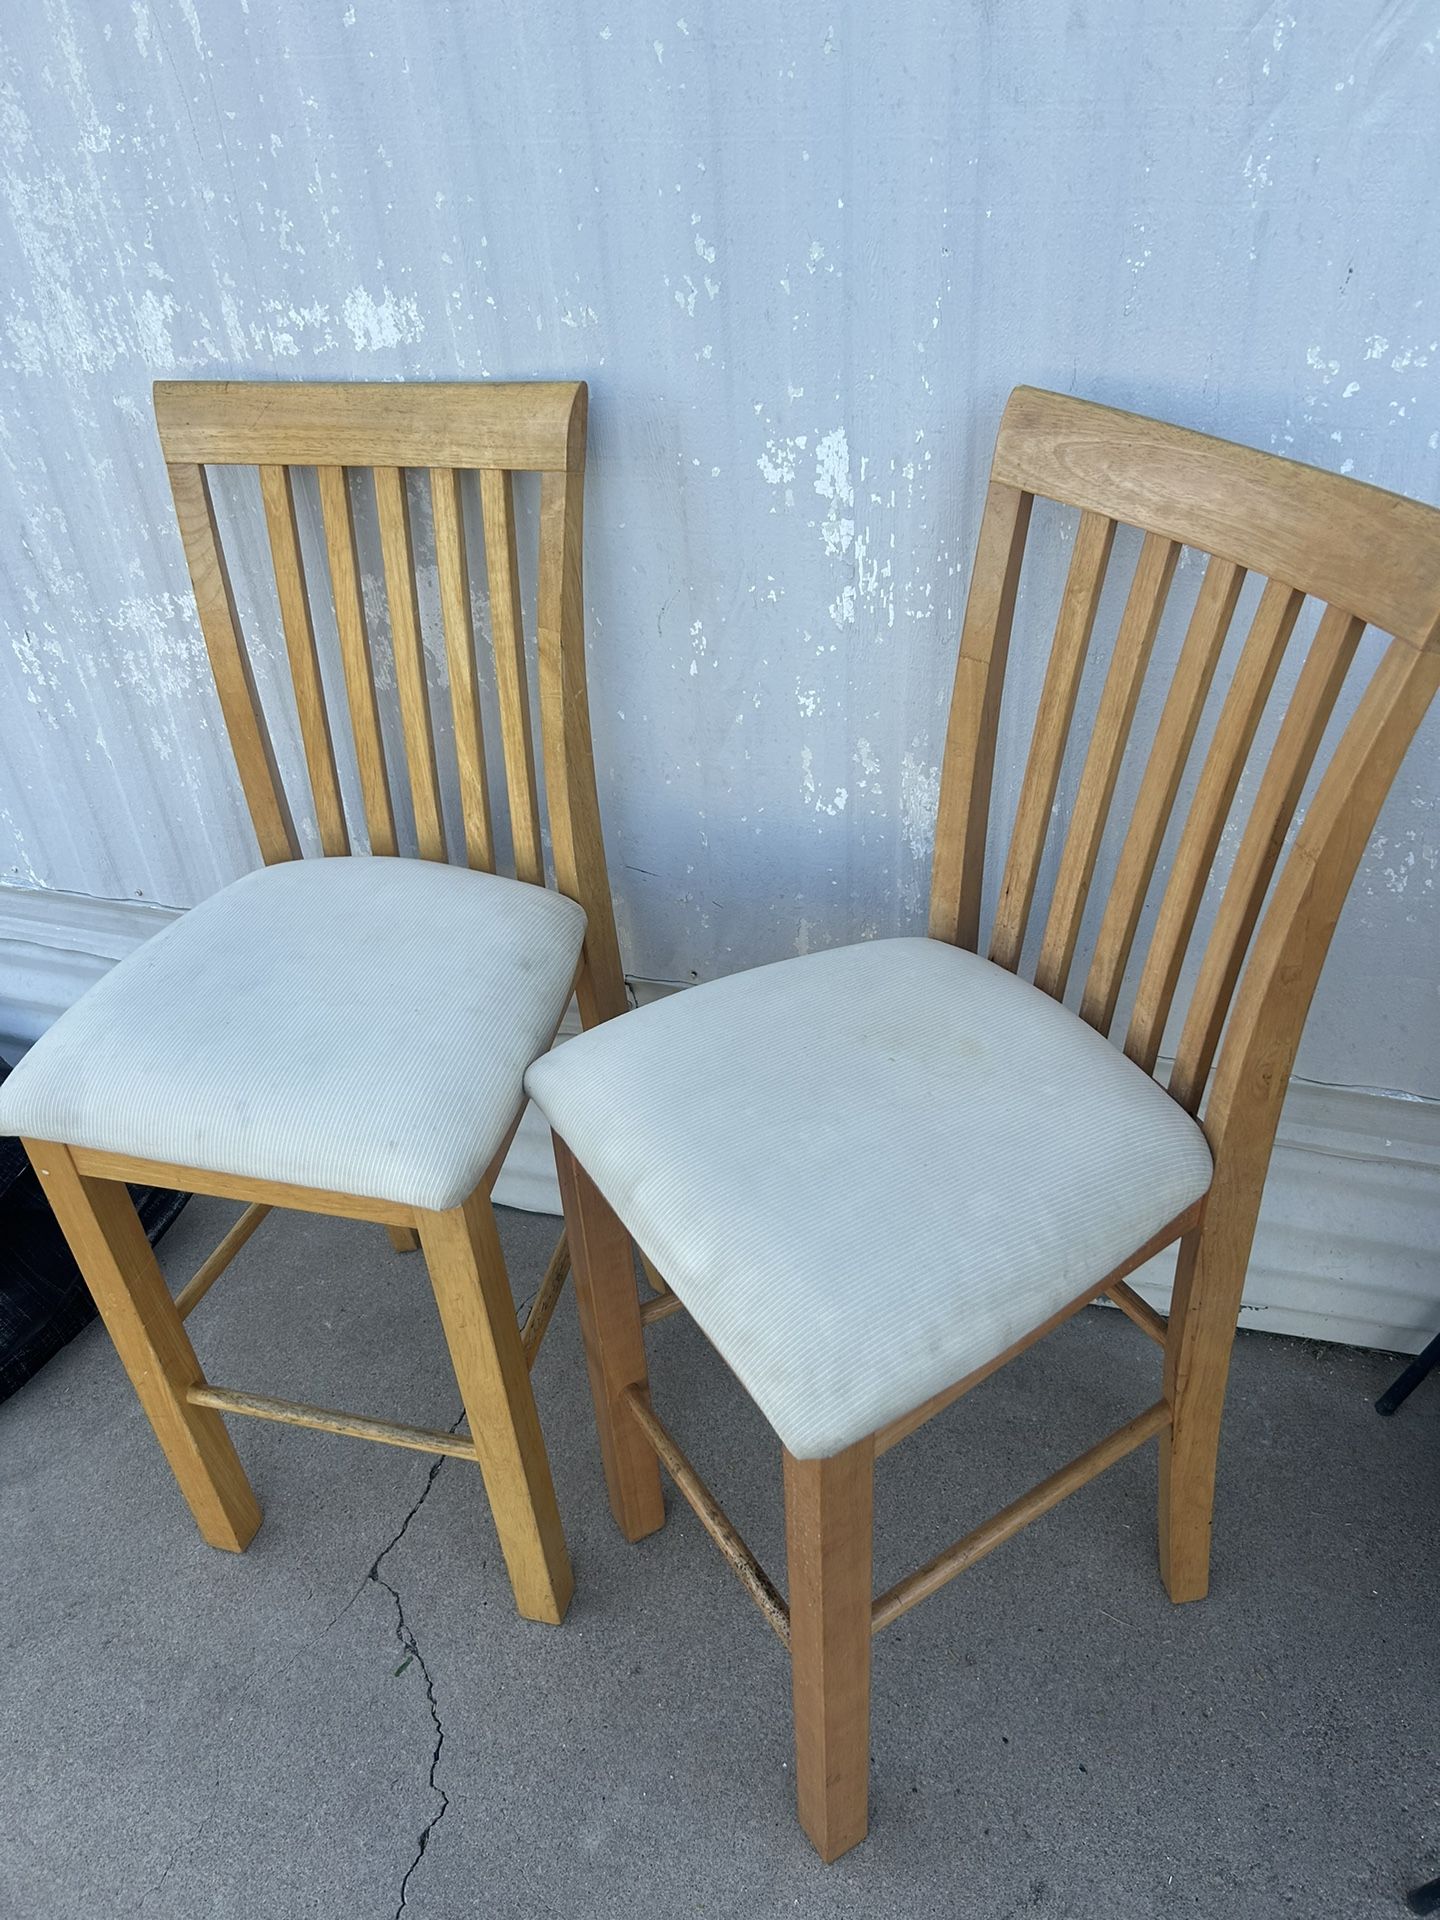 2 Countertop/bar stools